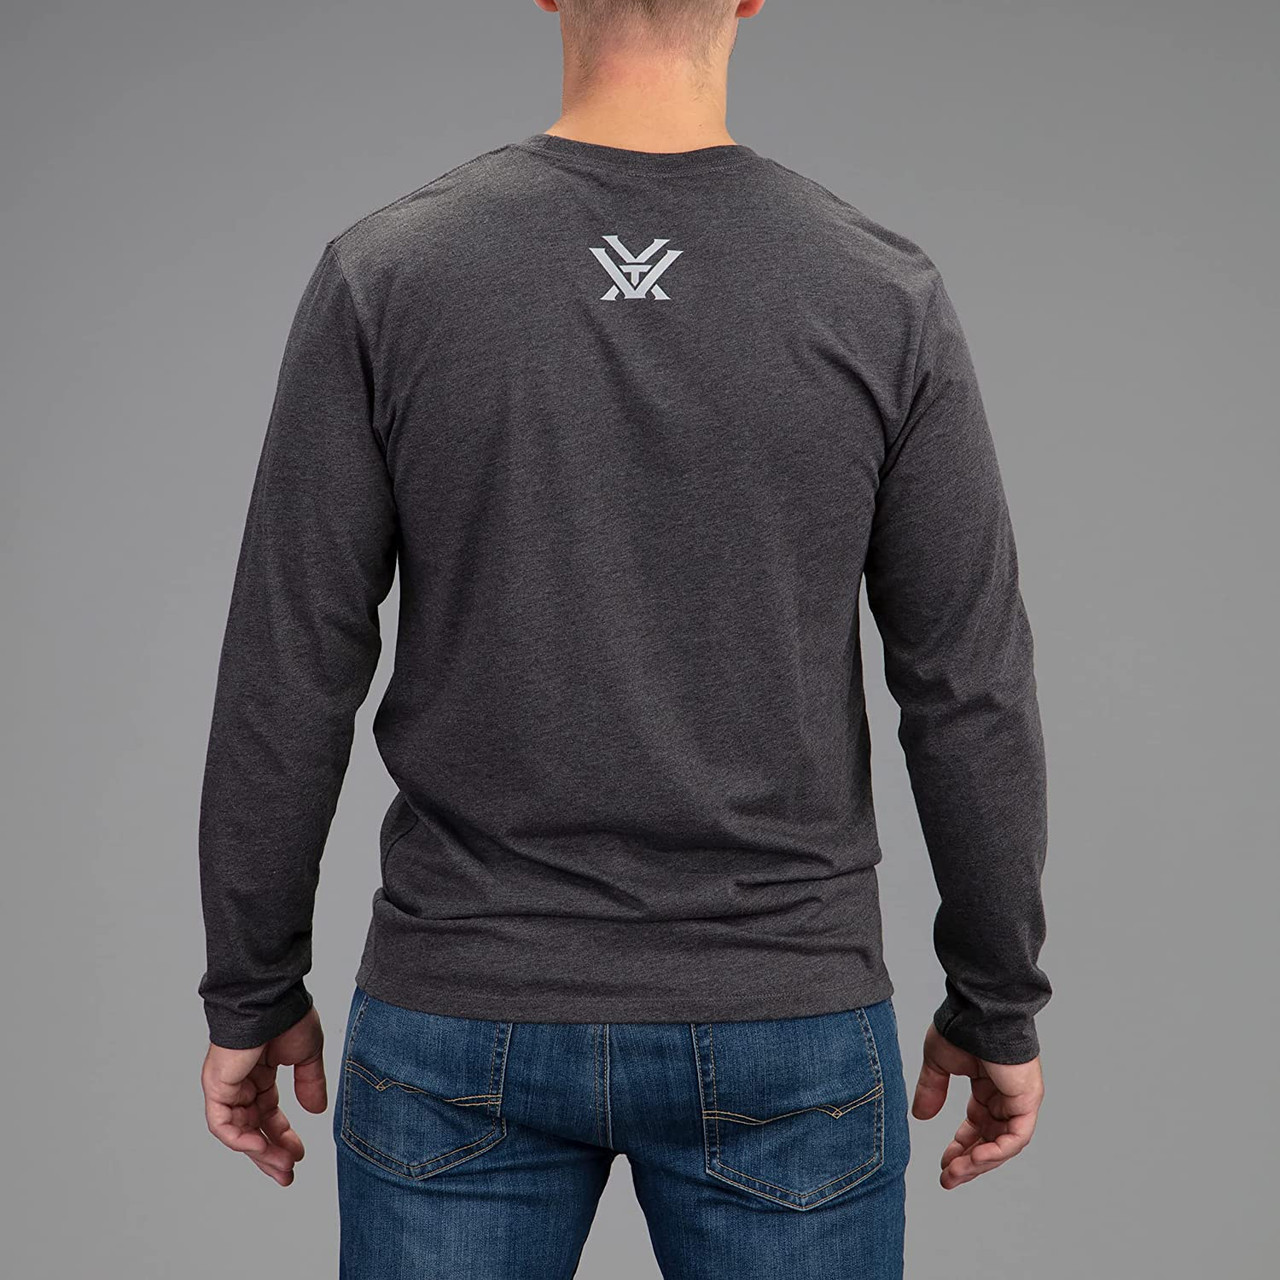 Vortex Optics Core Logo Long Sleeve Shirts -Charcoal Camo Heather- Medium